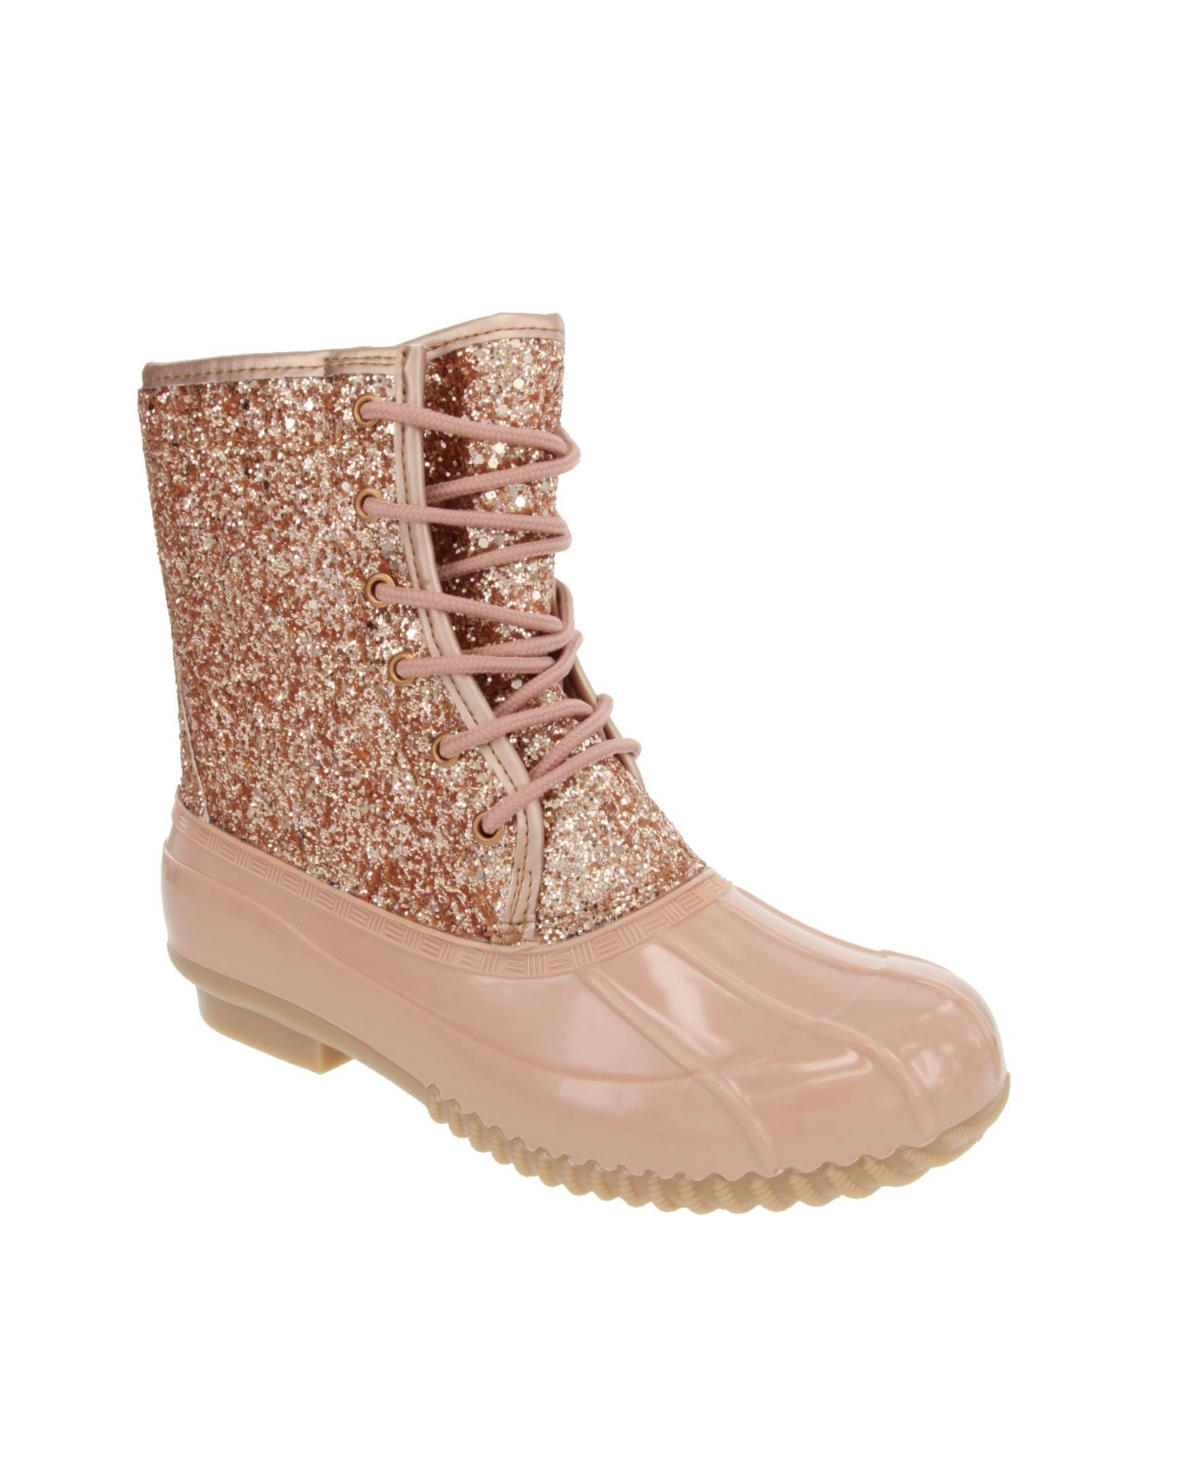 Women's Skylar Glitter Duck Boots - Gold Glitter/Navy